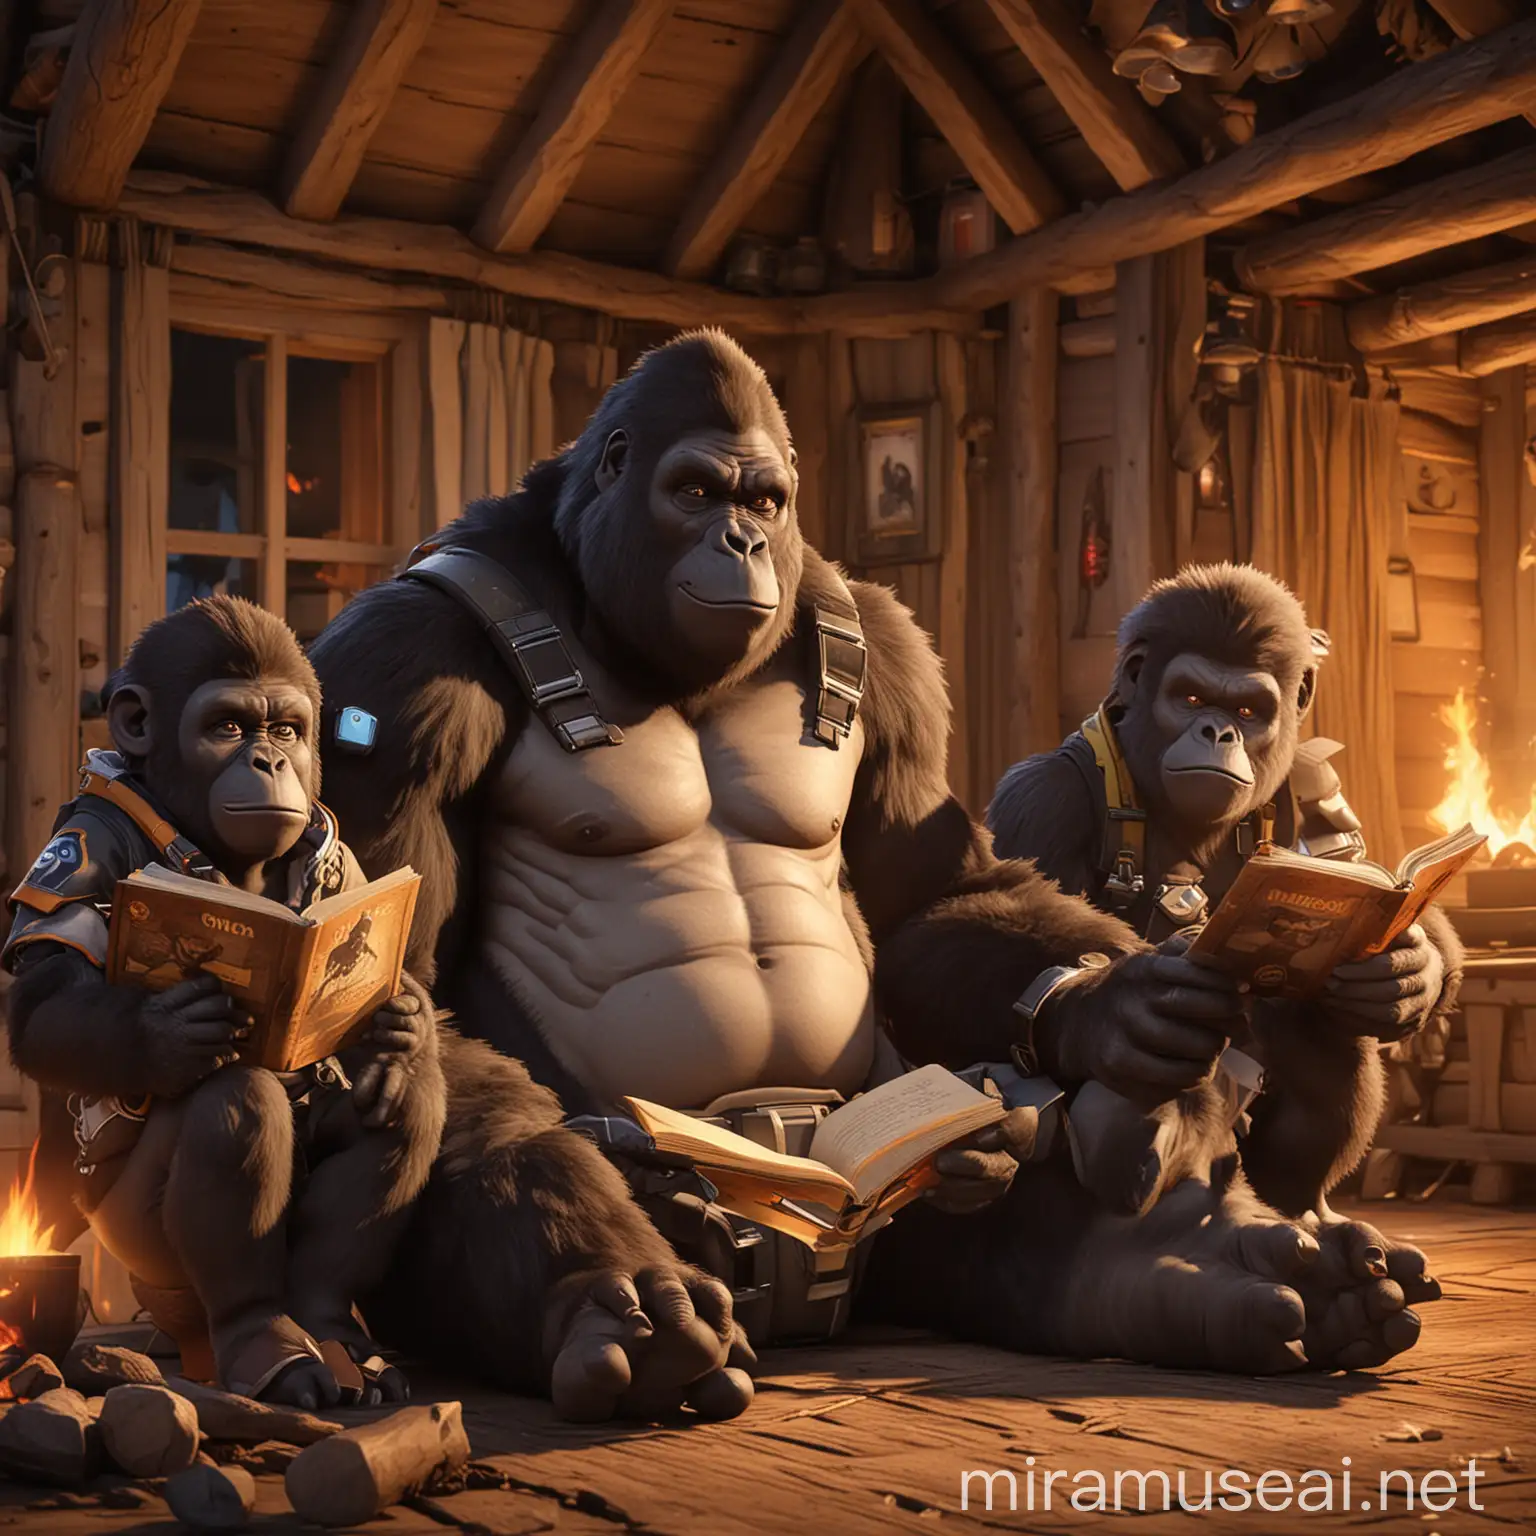 Winston Overwatch Storytime Gorilla Family in Log Cabin